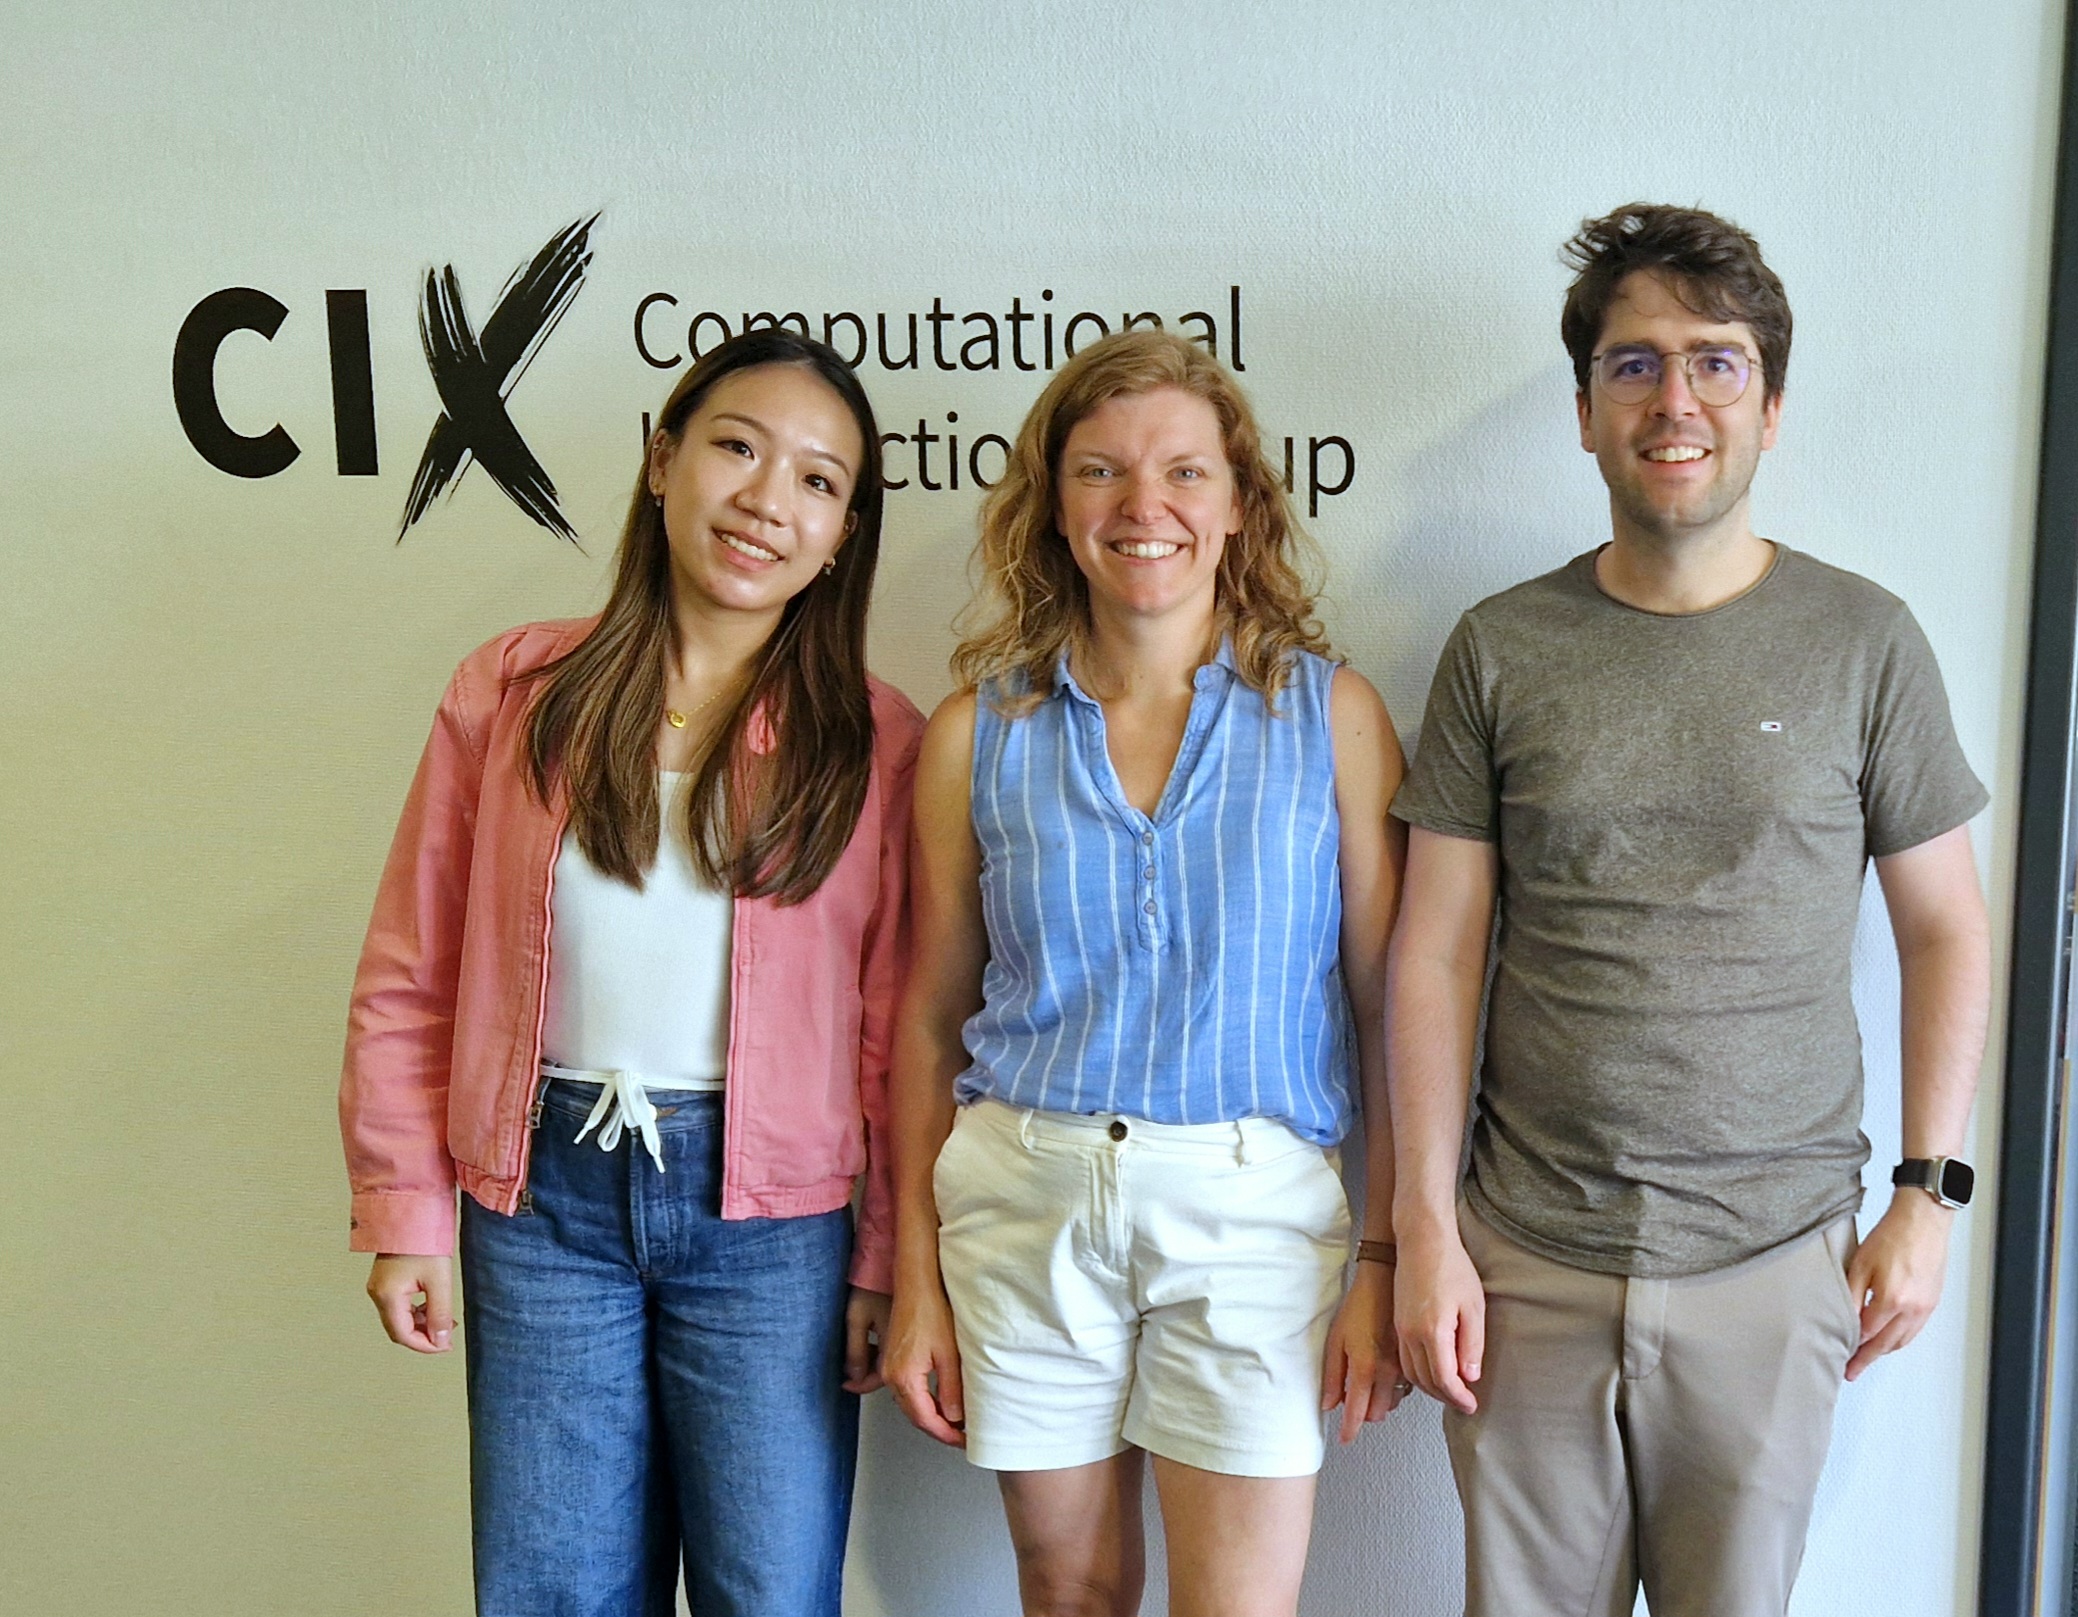 Yi Li from Monash university, Melbourne, visits CIX